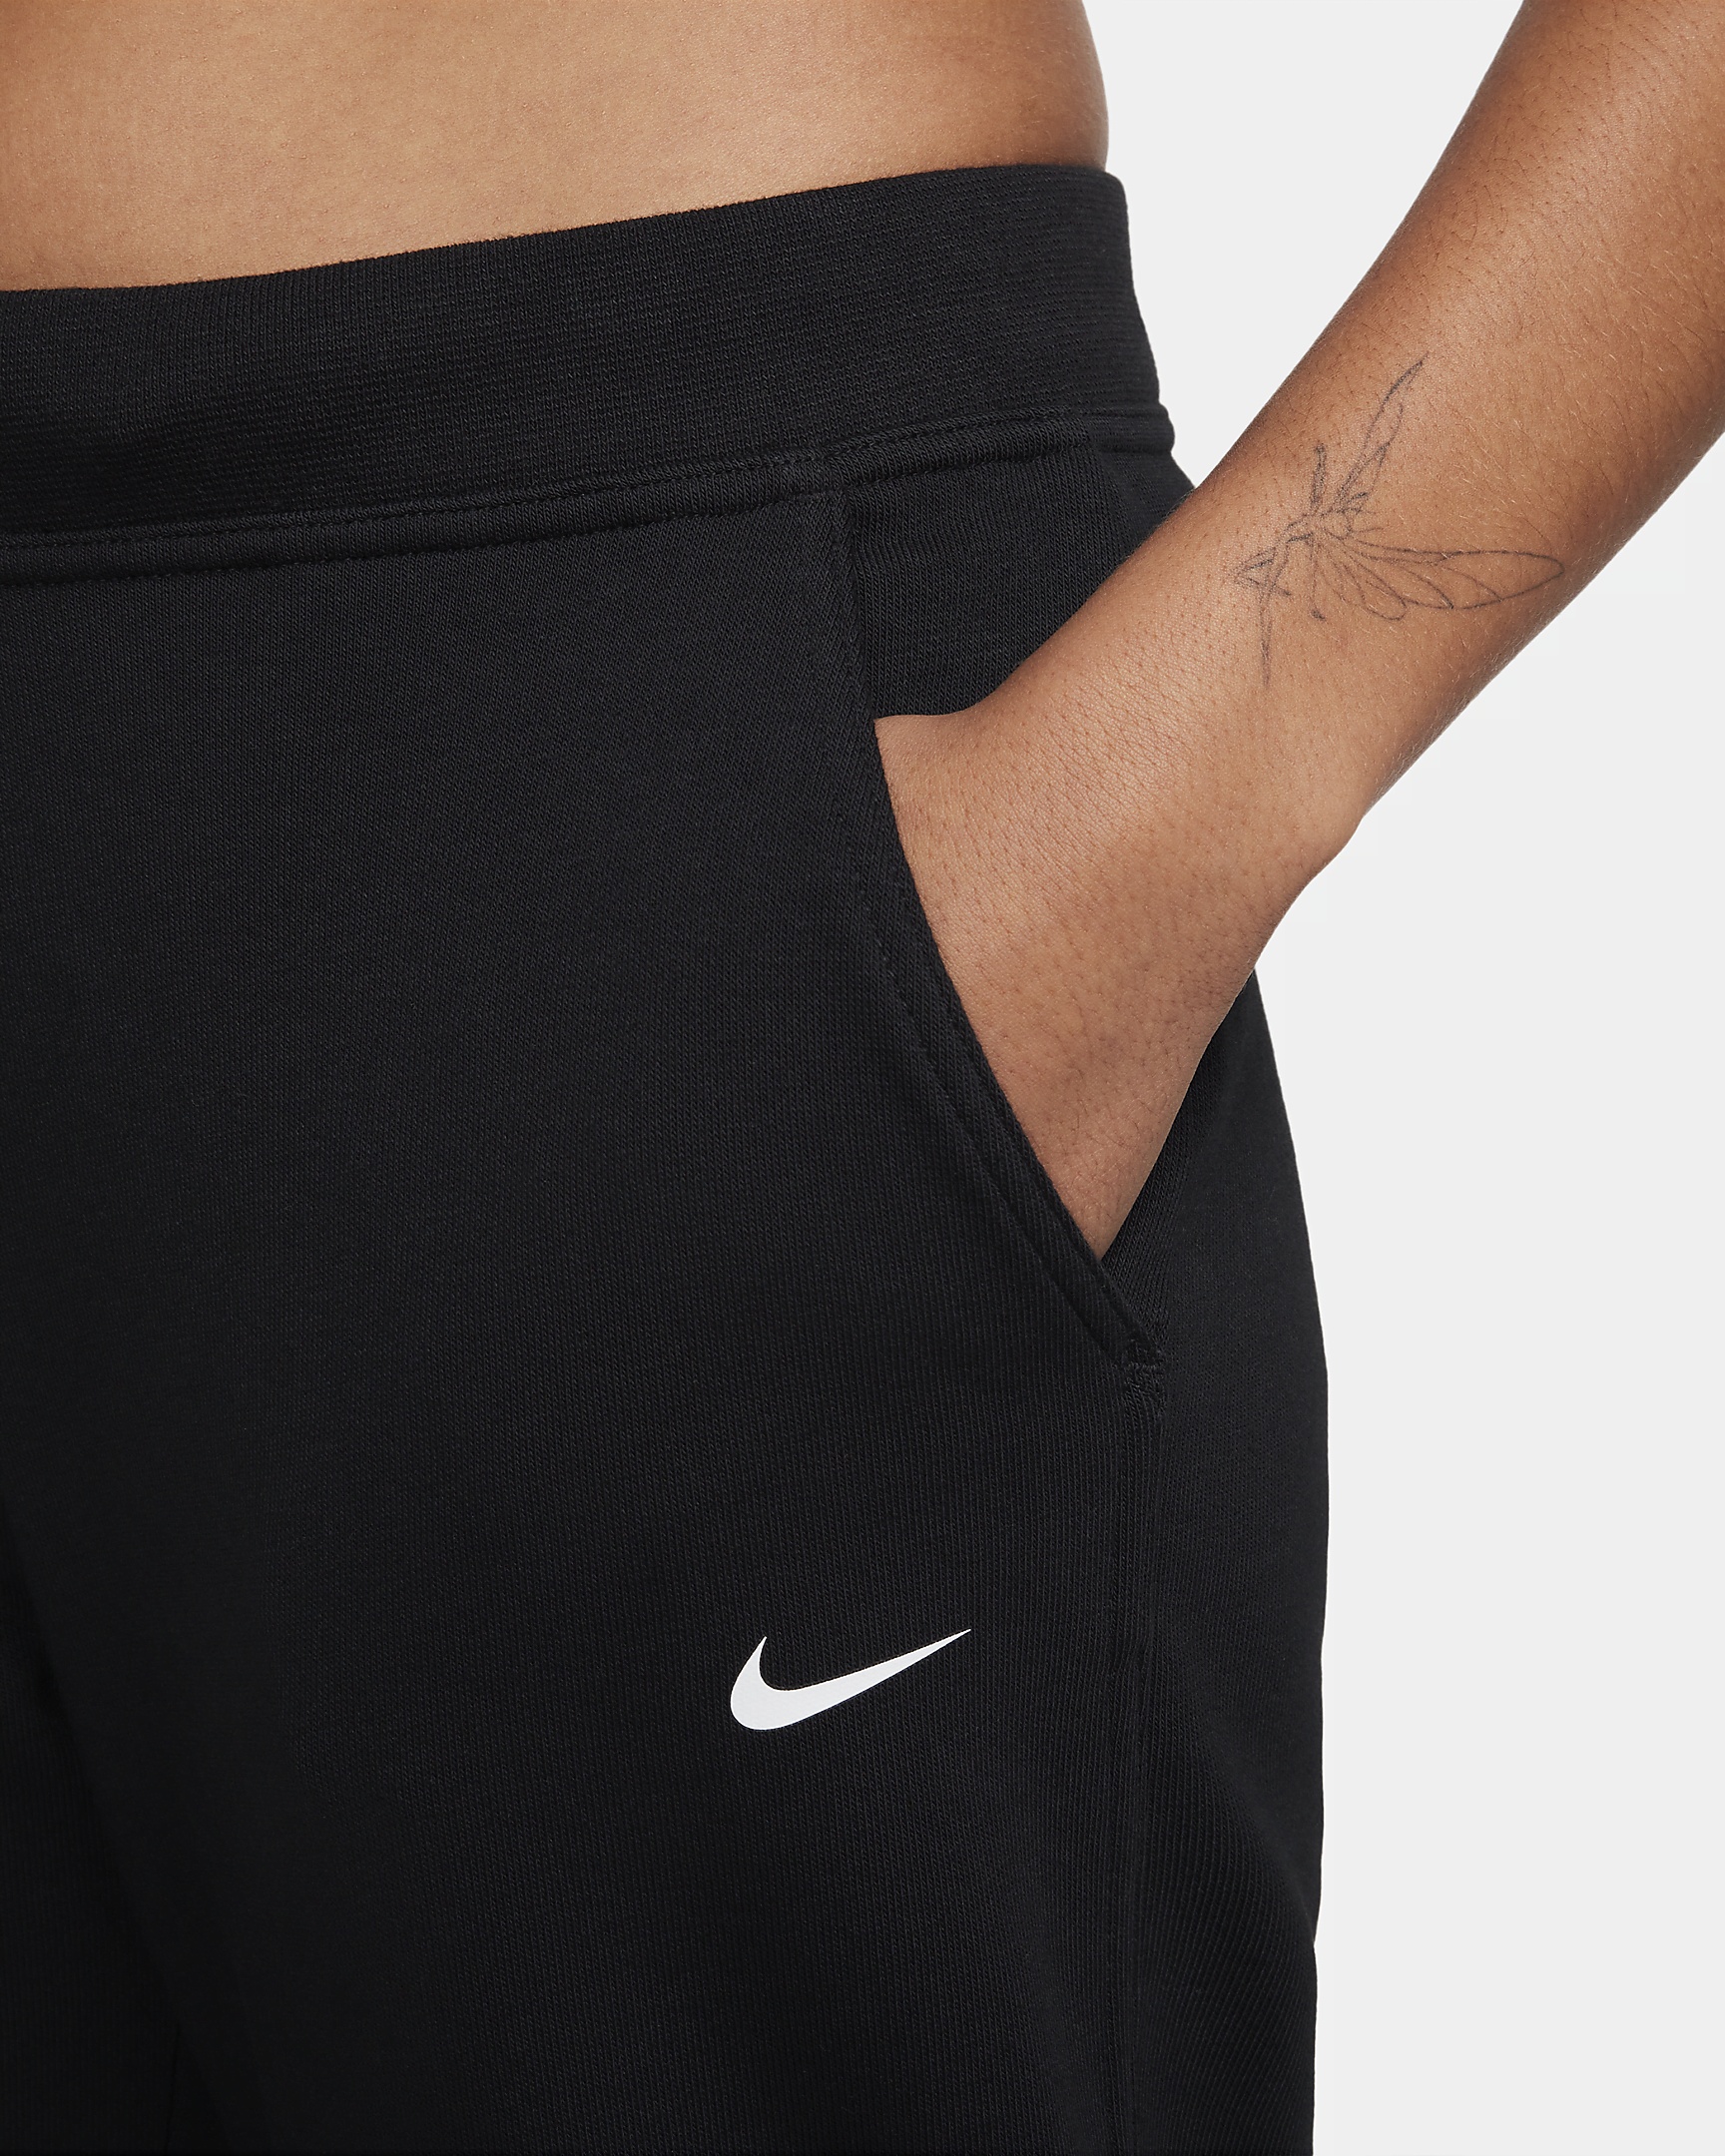 Nike Women's Dri-FIT Get Fit Training Pants - 3